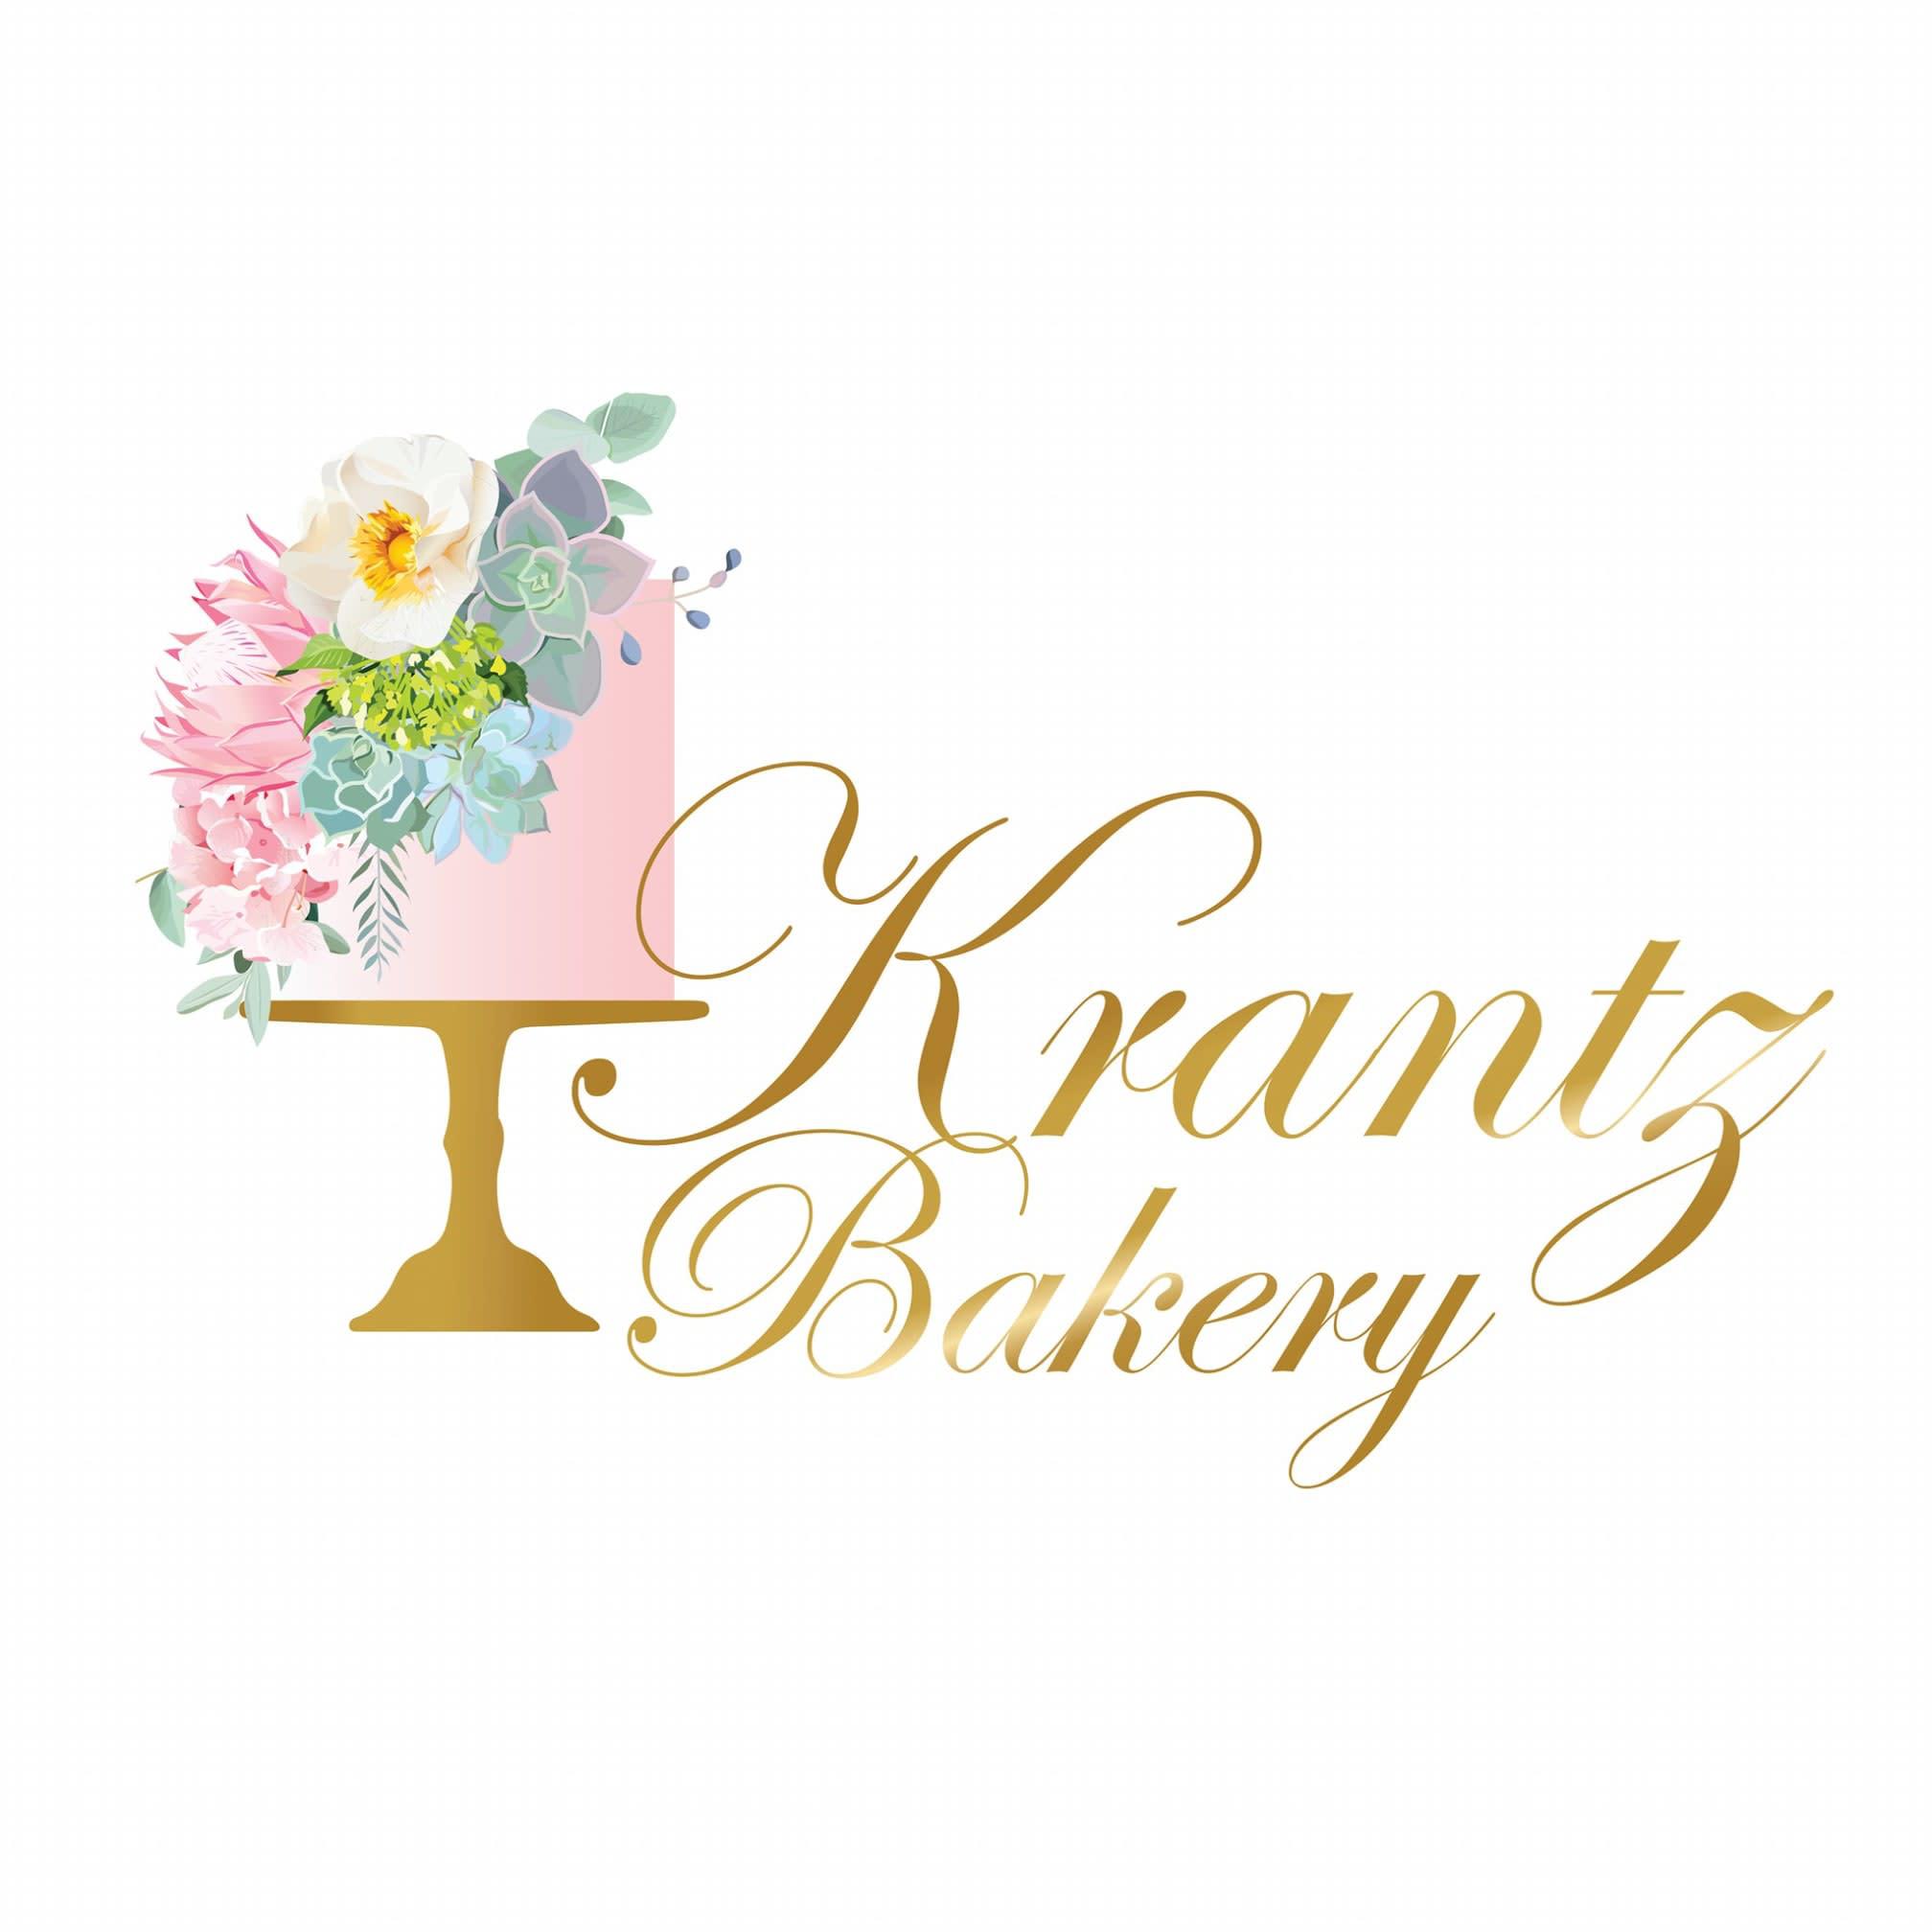 Krantz Bakery - Watford, Hertfordshire WD17 1NA - 07597 578992 | ShowMeLocal.com